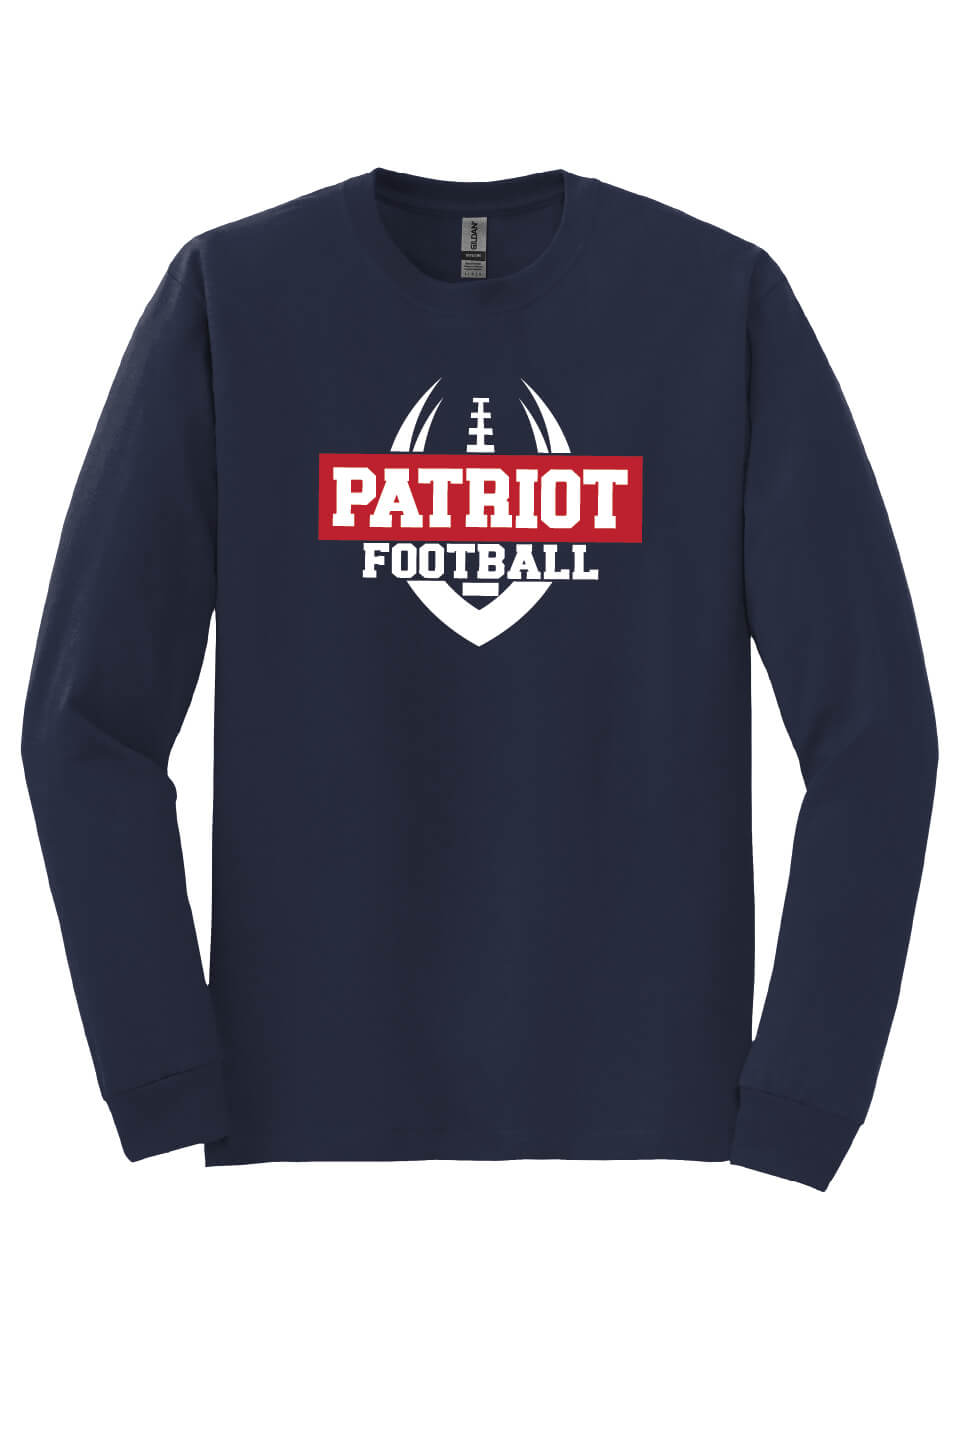 Patriot Football Long Sleeve T-shirts (Youth) navy